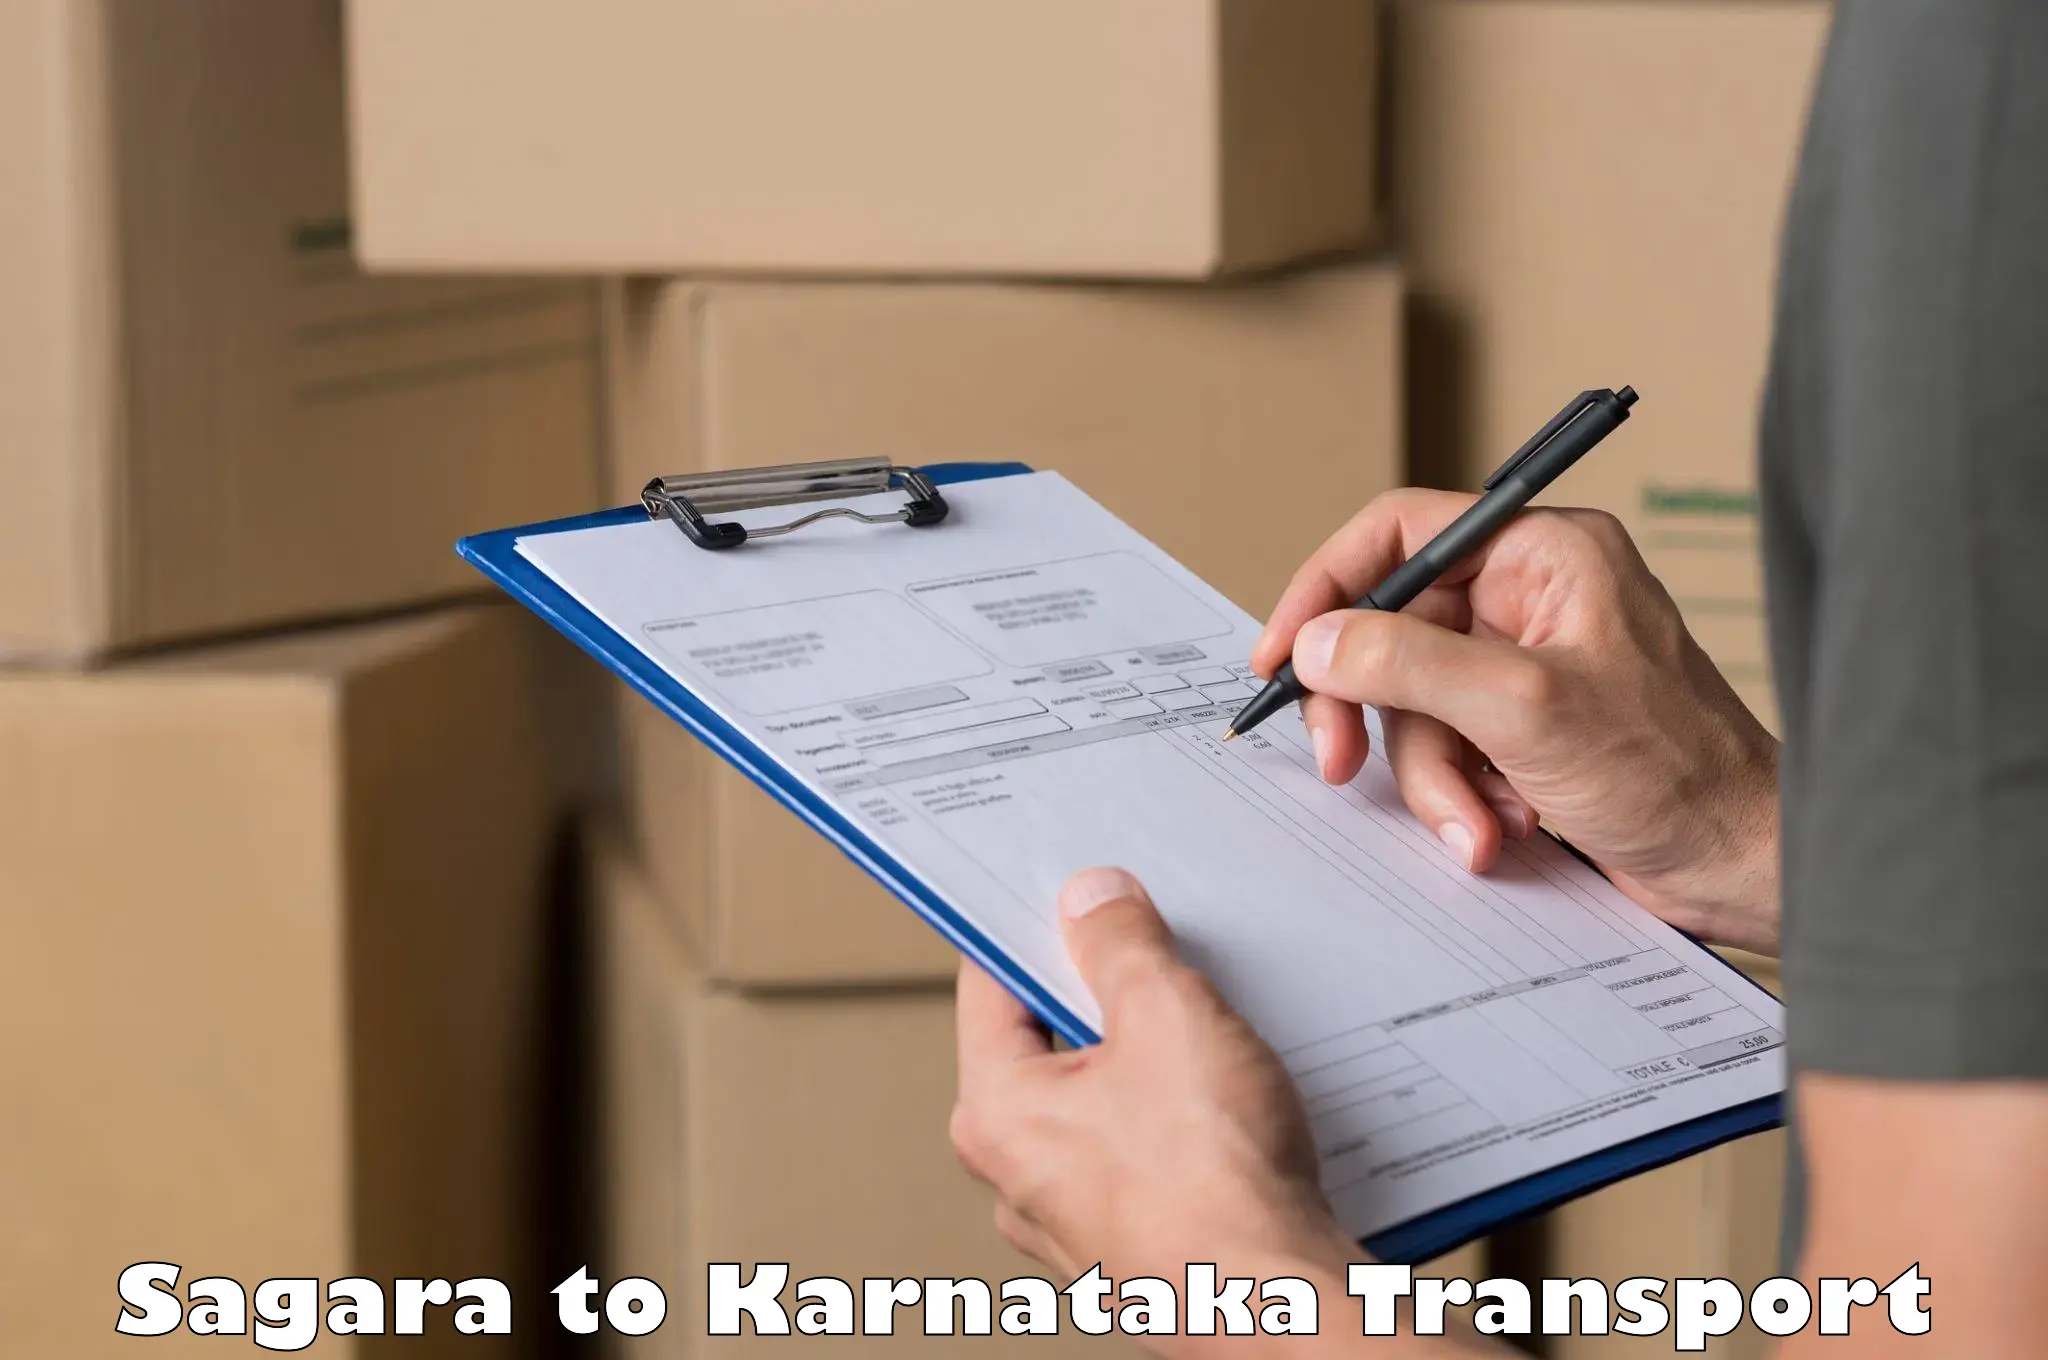 Truck transport companies in India Sagara to Gundlupete